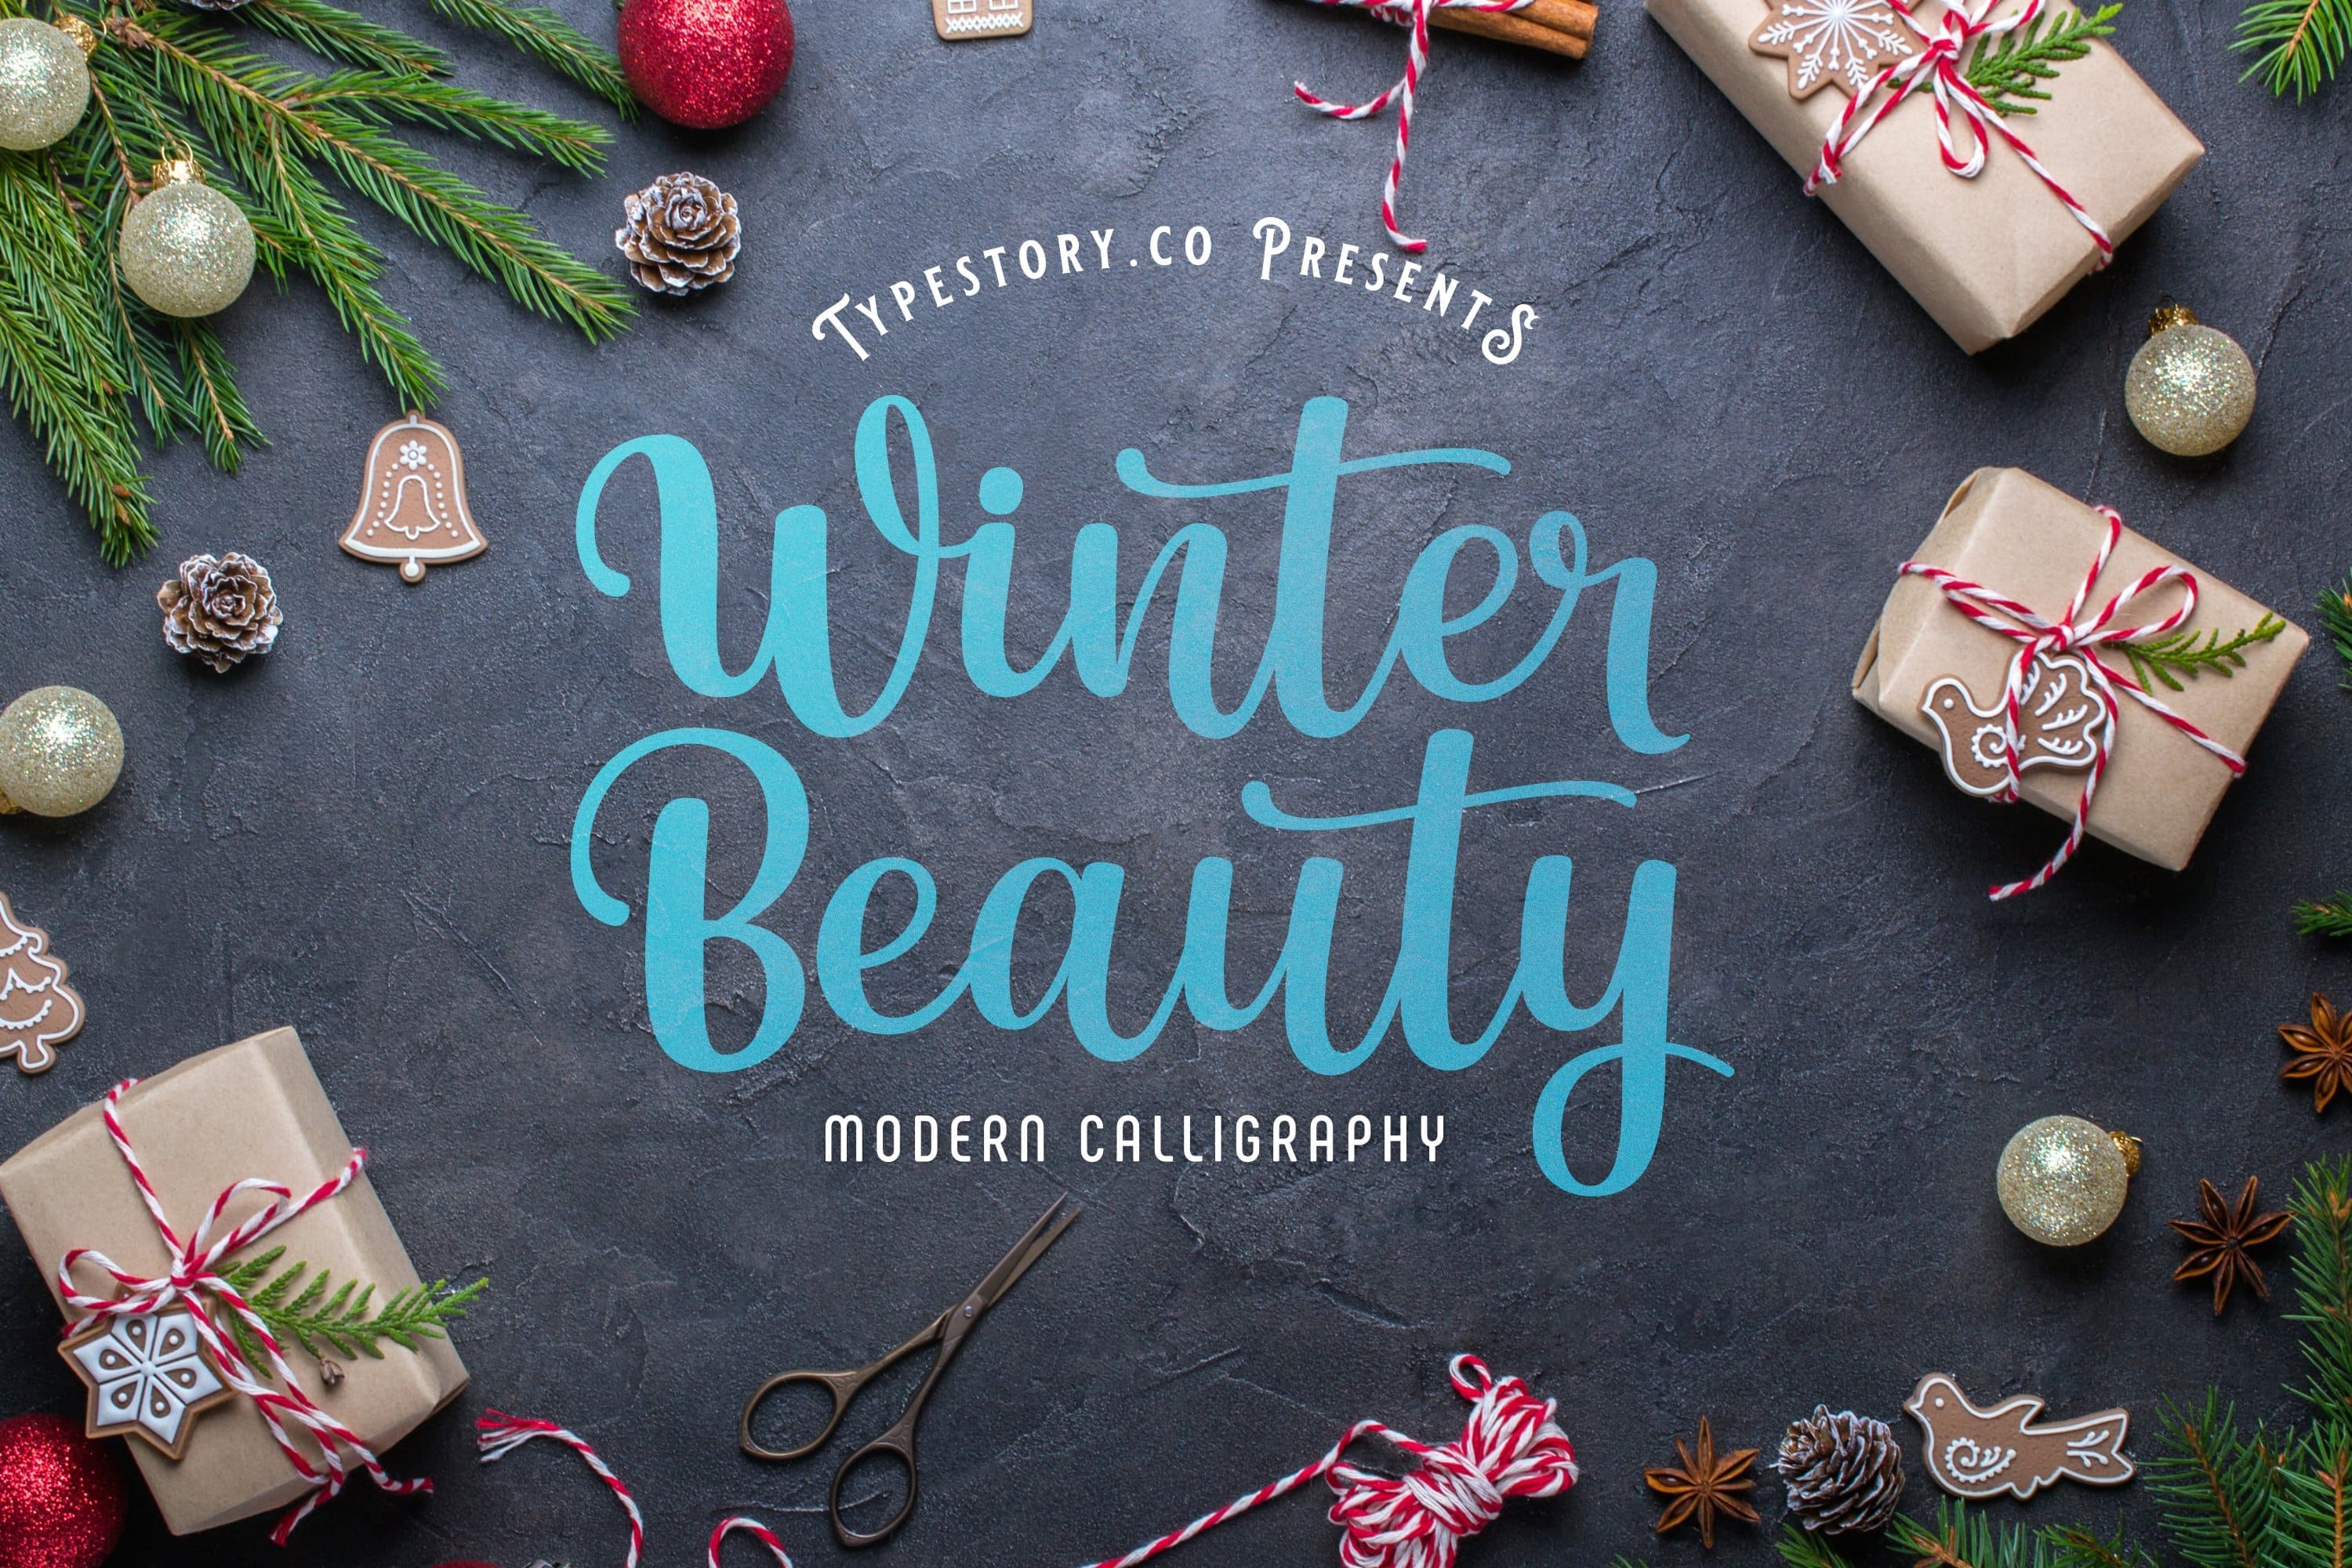 Typestory.co presents “Winter Beauty” modern calligraphy.